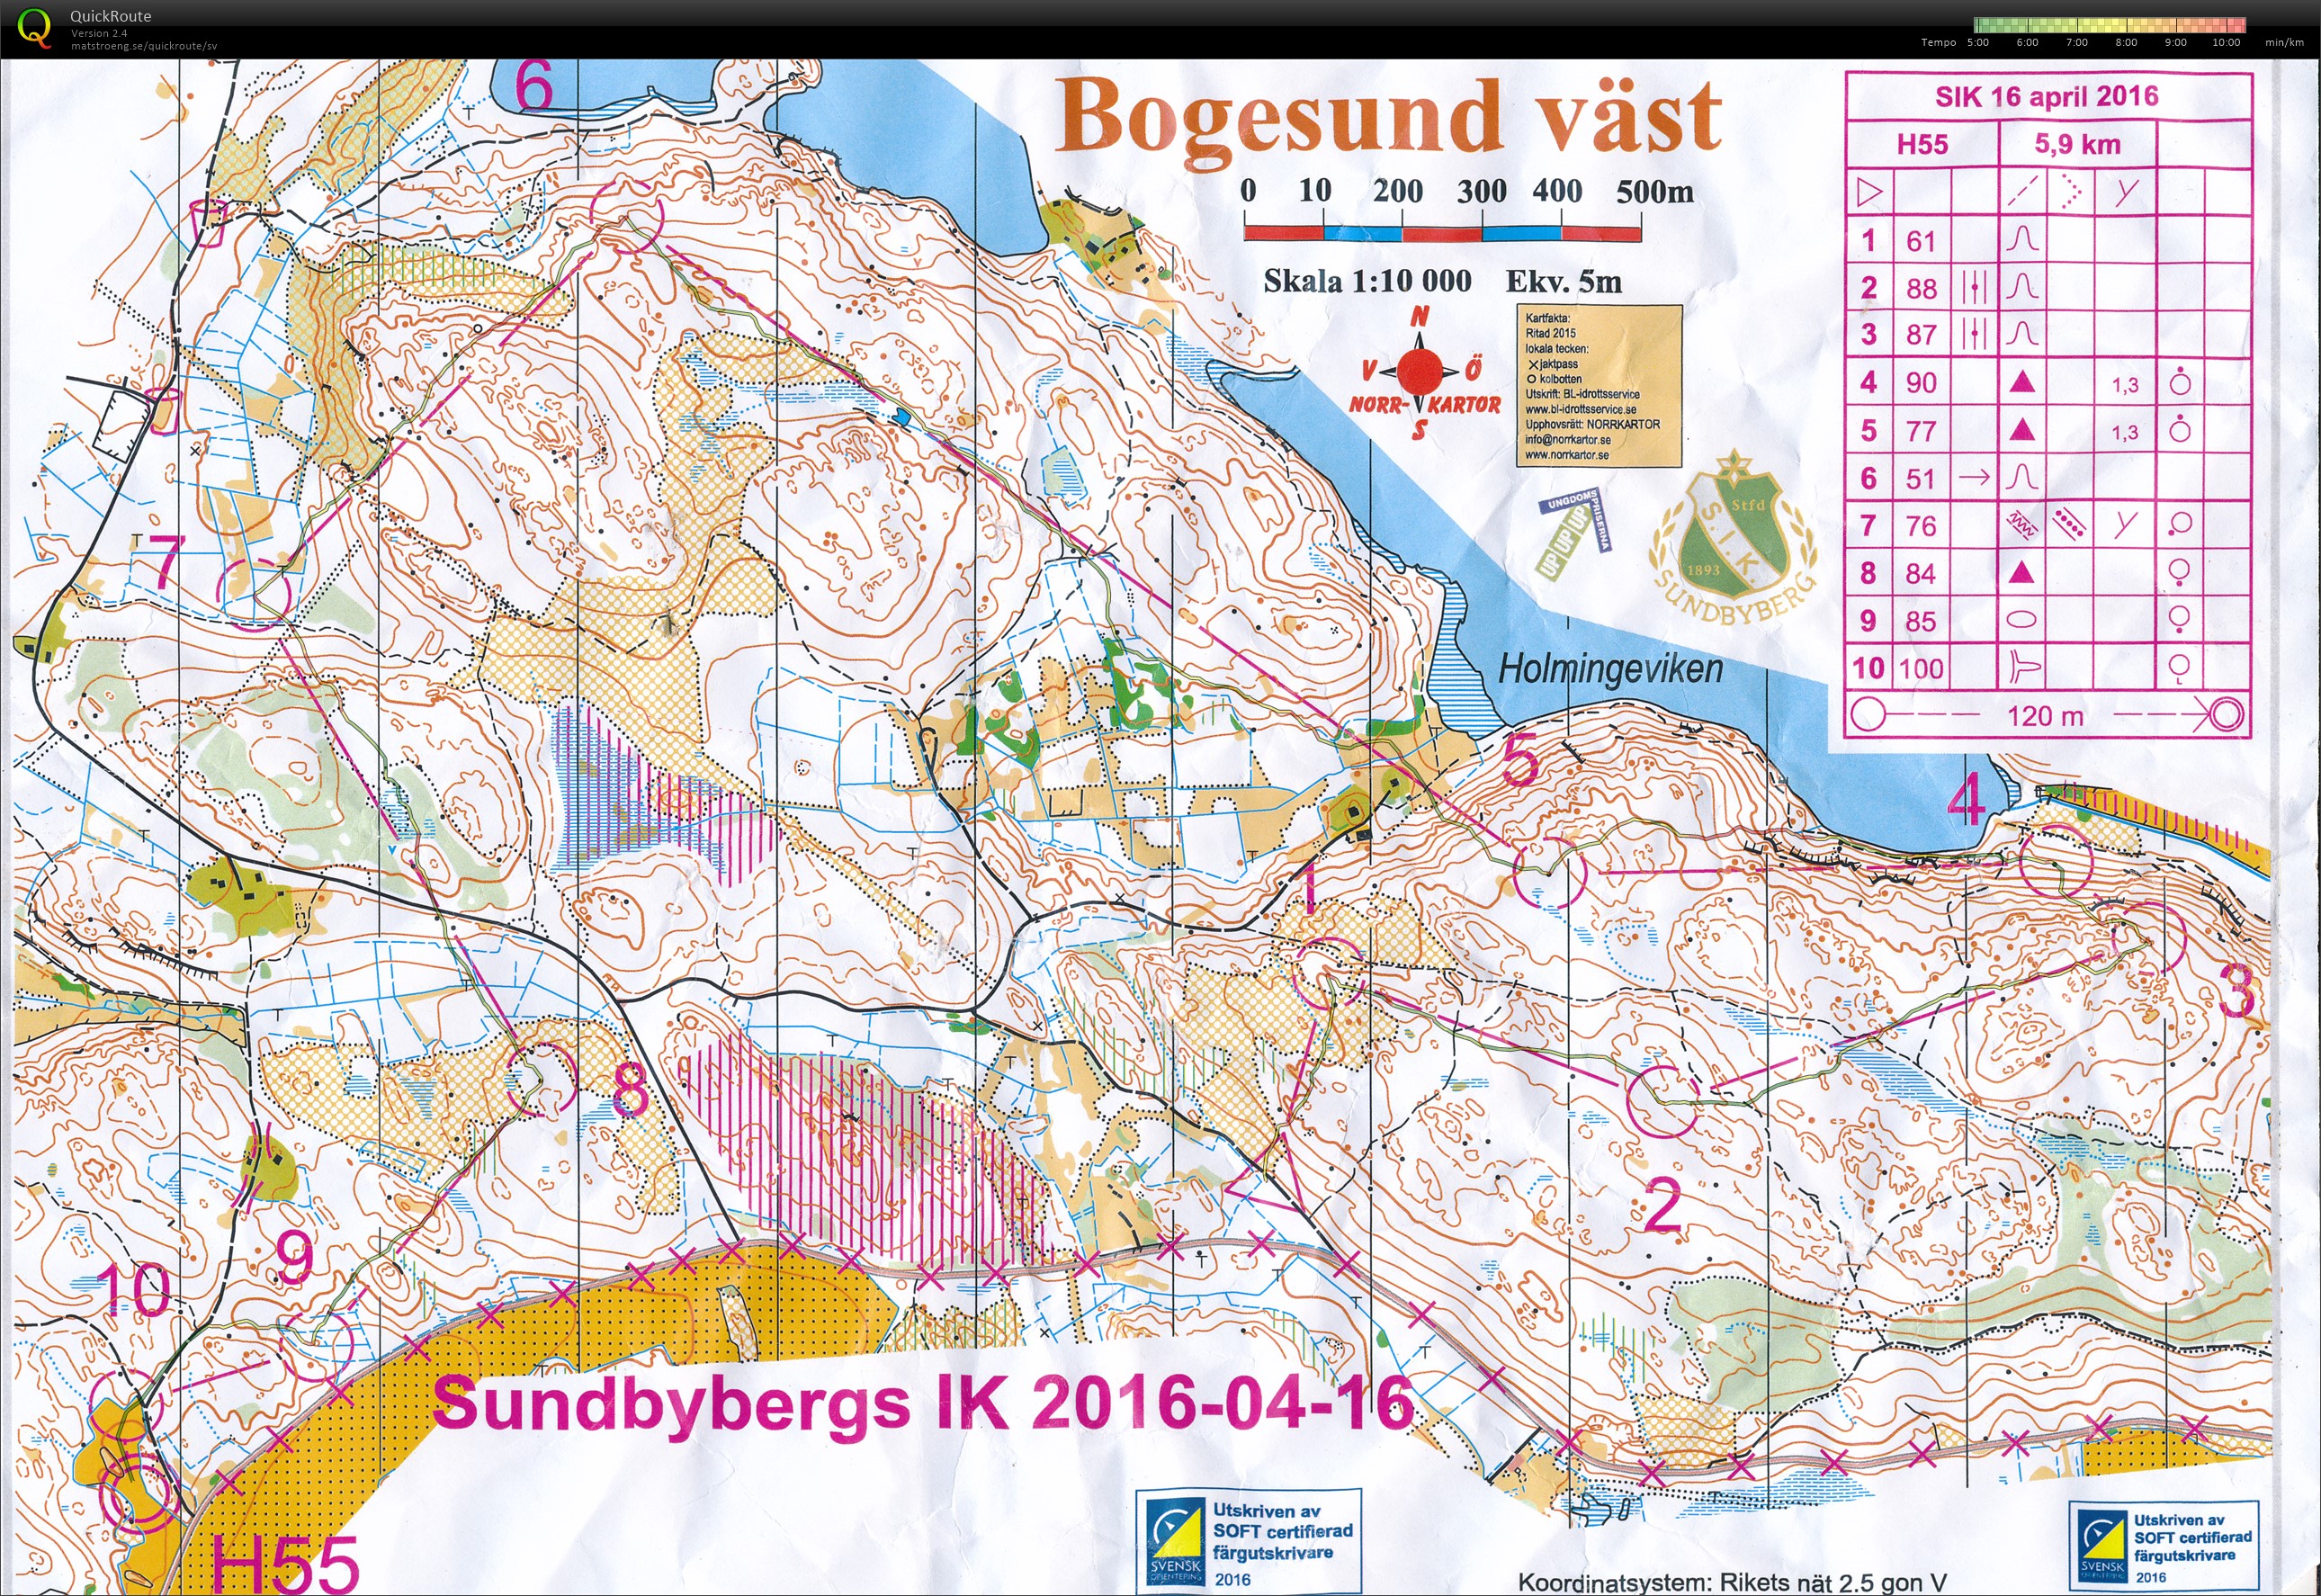 Sundbyberg (2016-04-16)